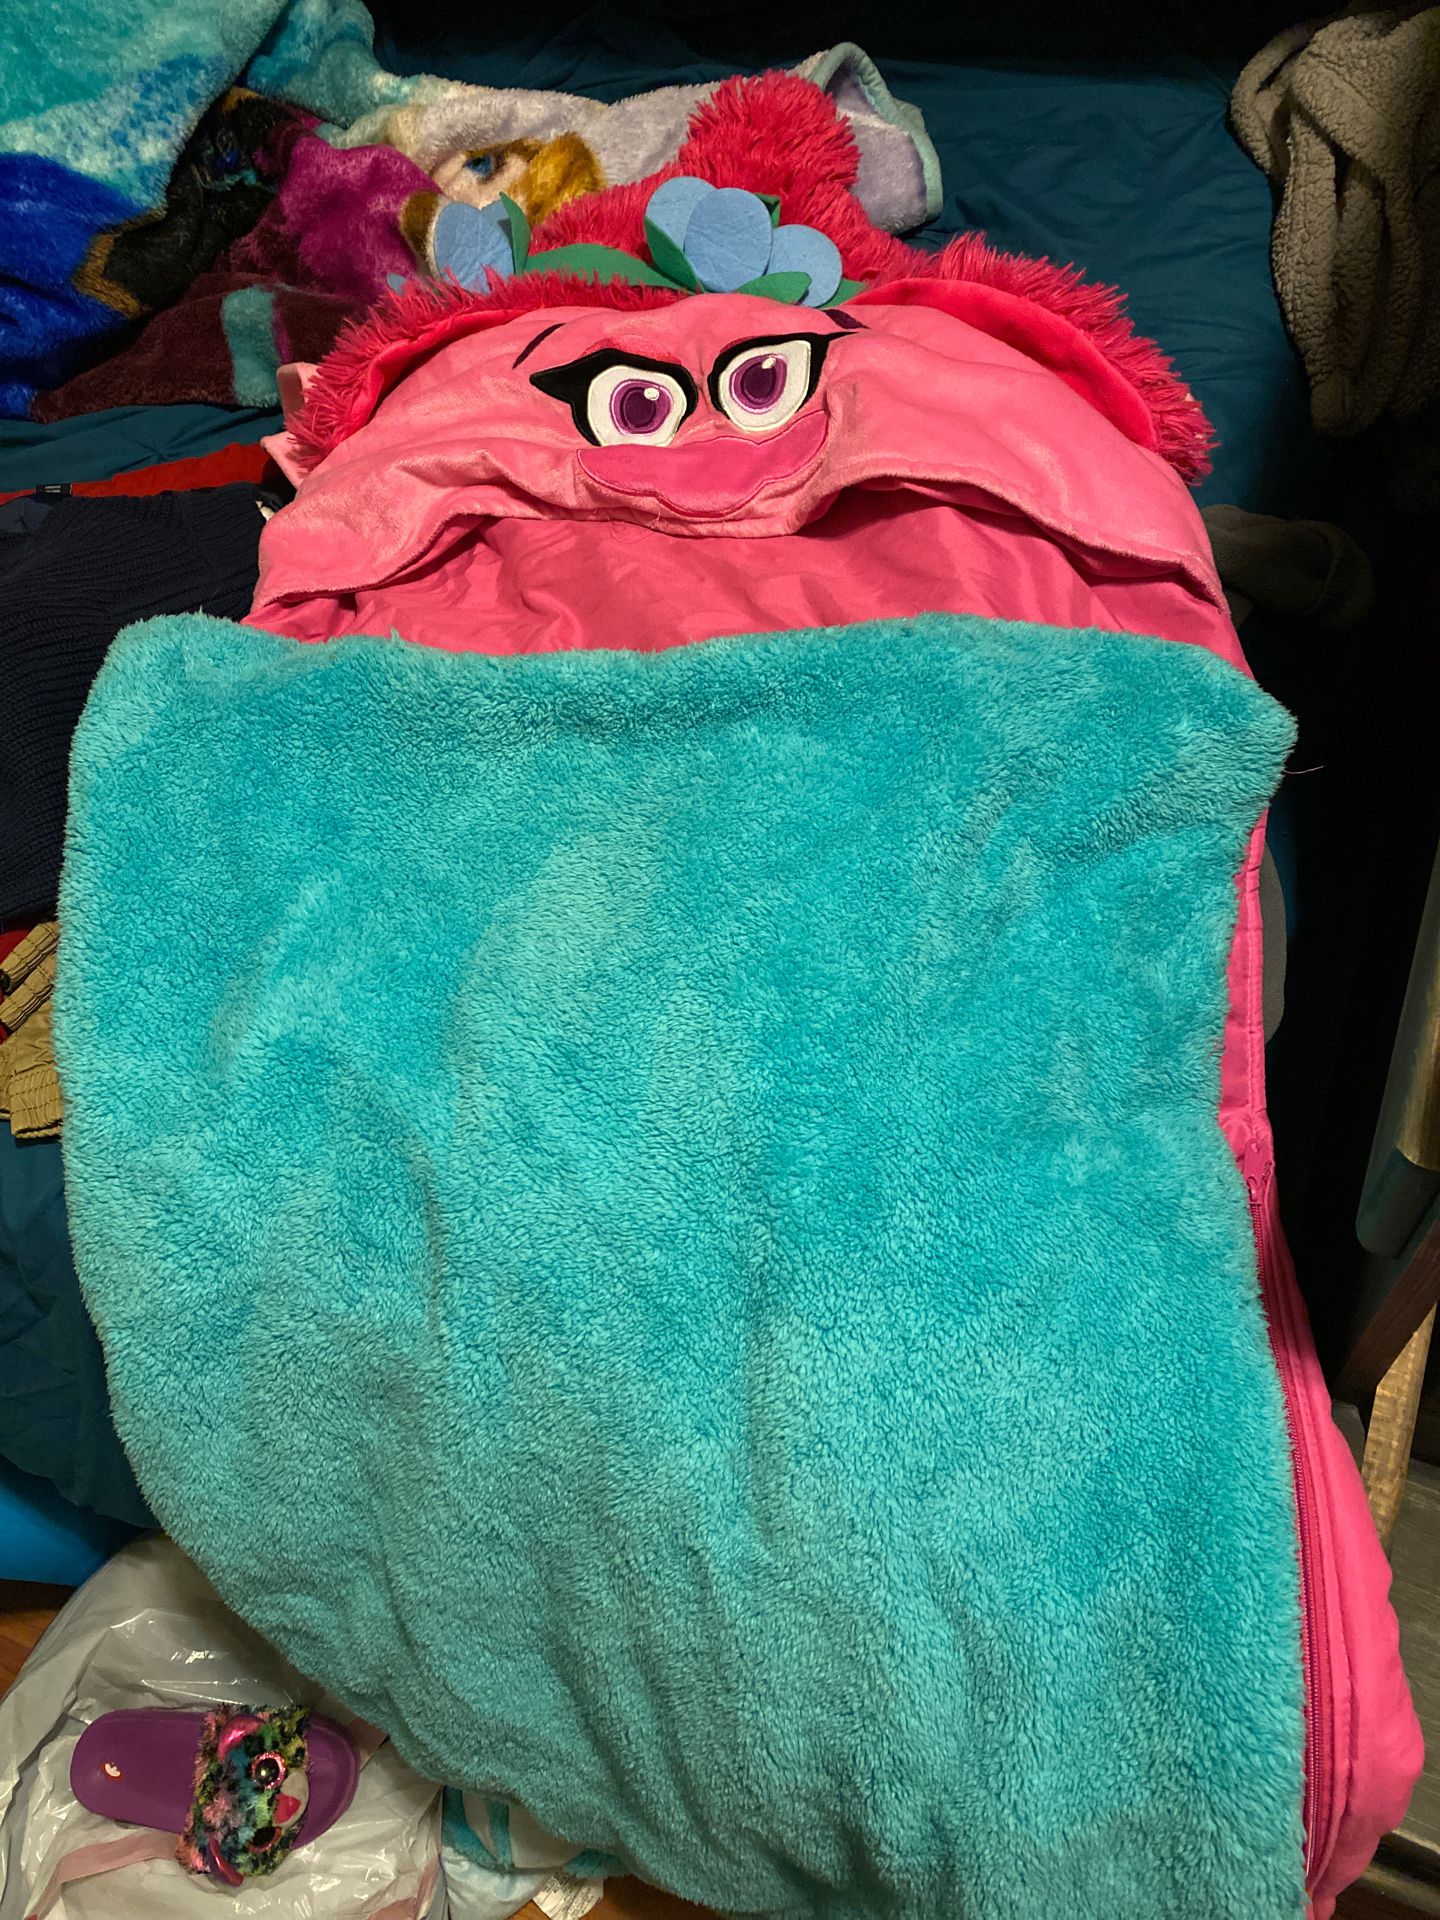 Poppy sleeping bag